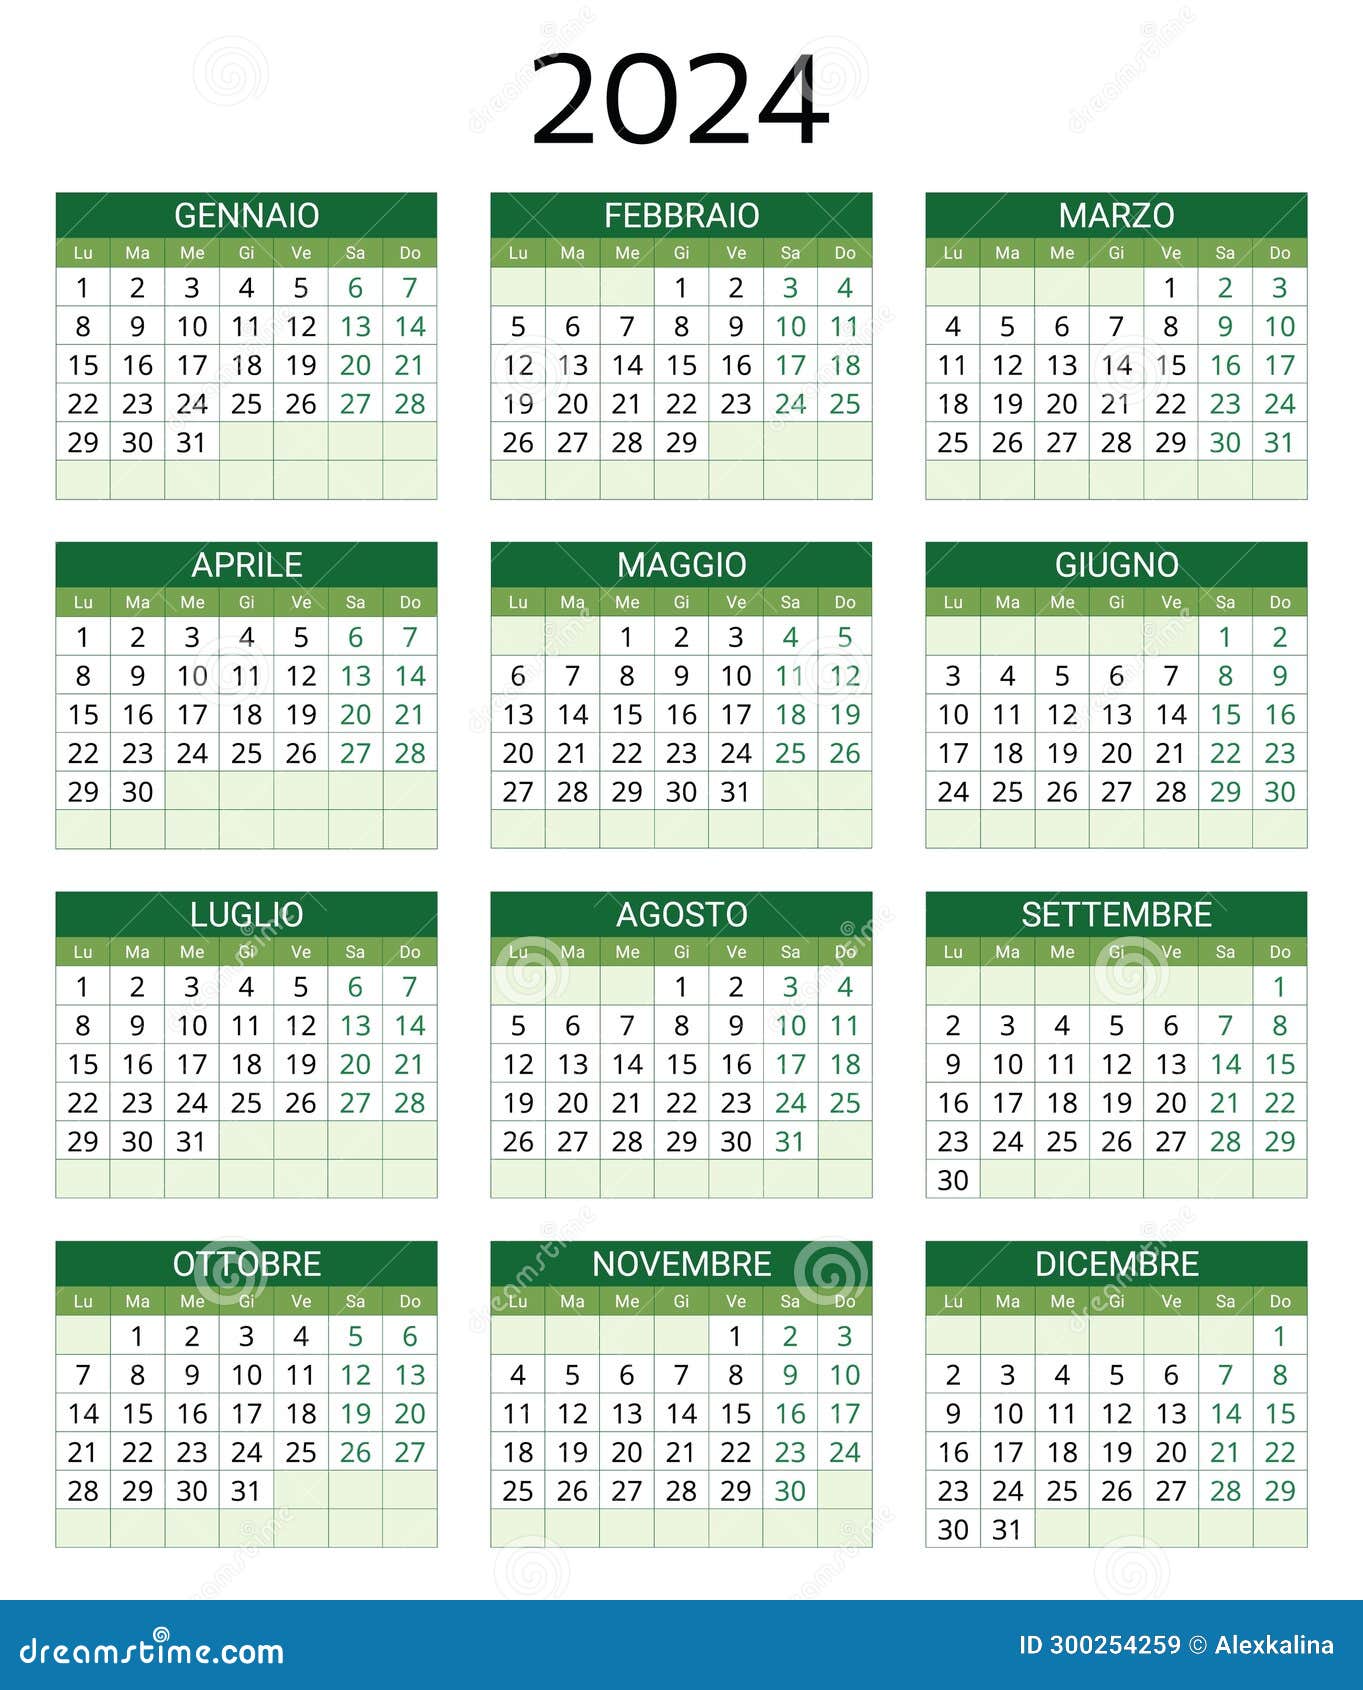 2024 italian calendar. printable, editable   for italy. 12 months year calendario